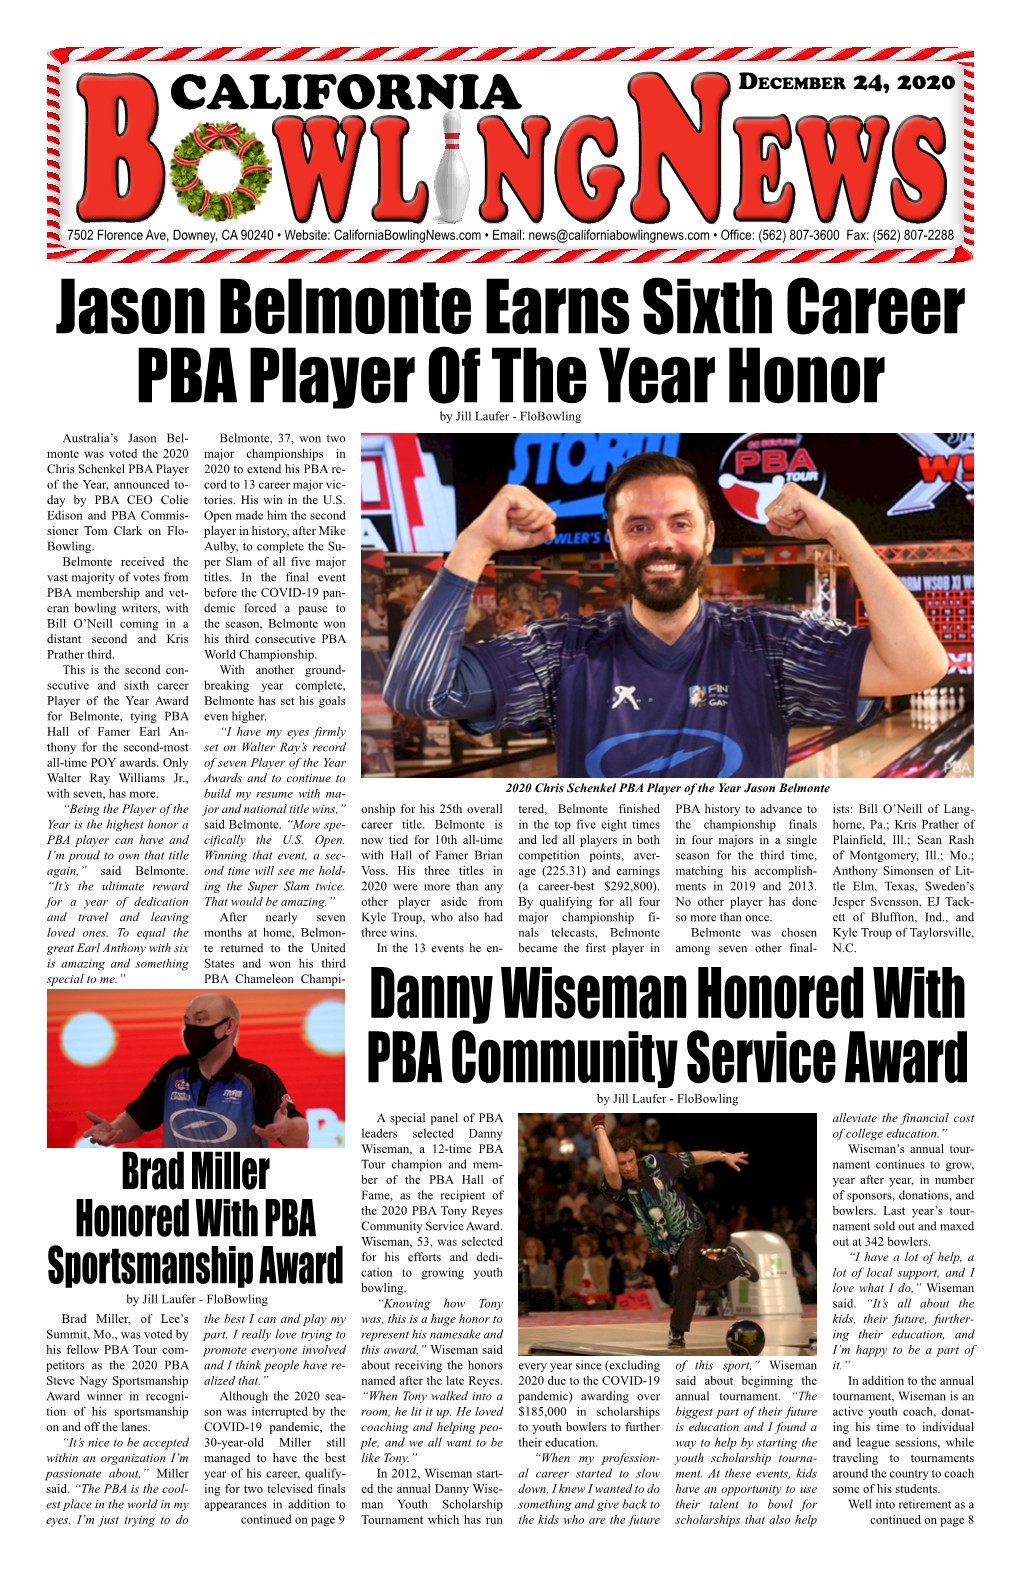 Jason Belmonte Earns Sixth Career PBA Player of the Year Honor